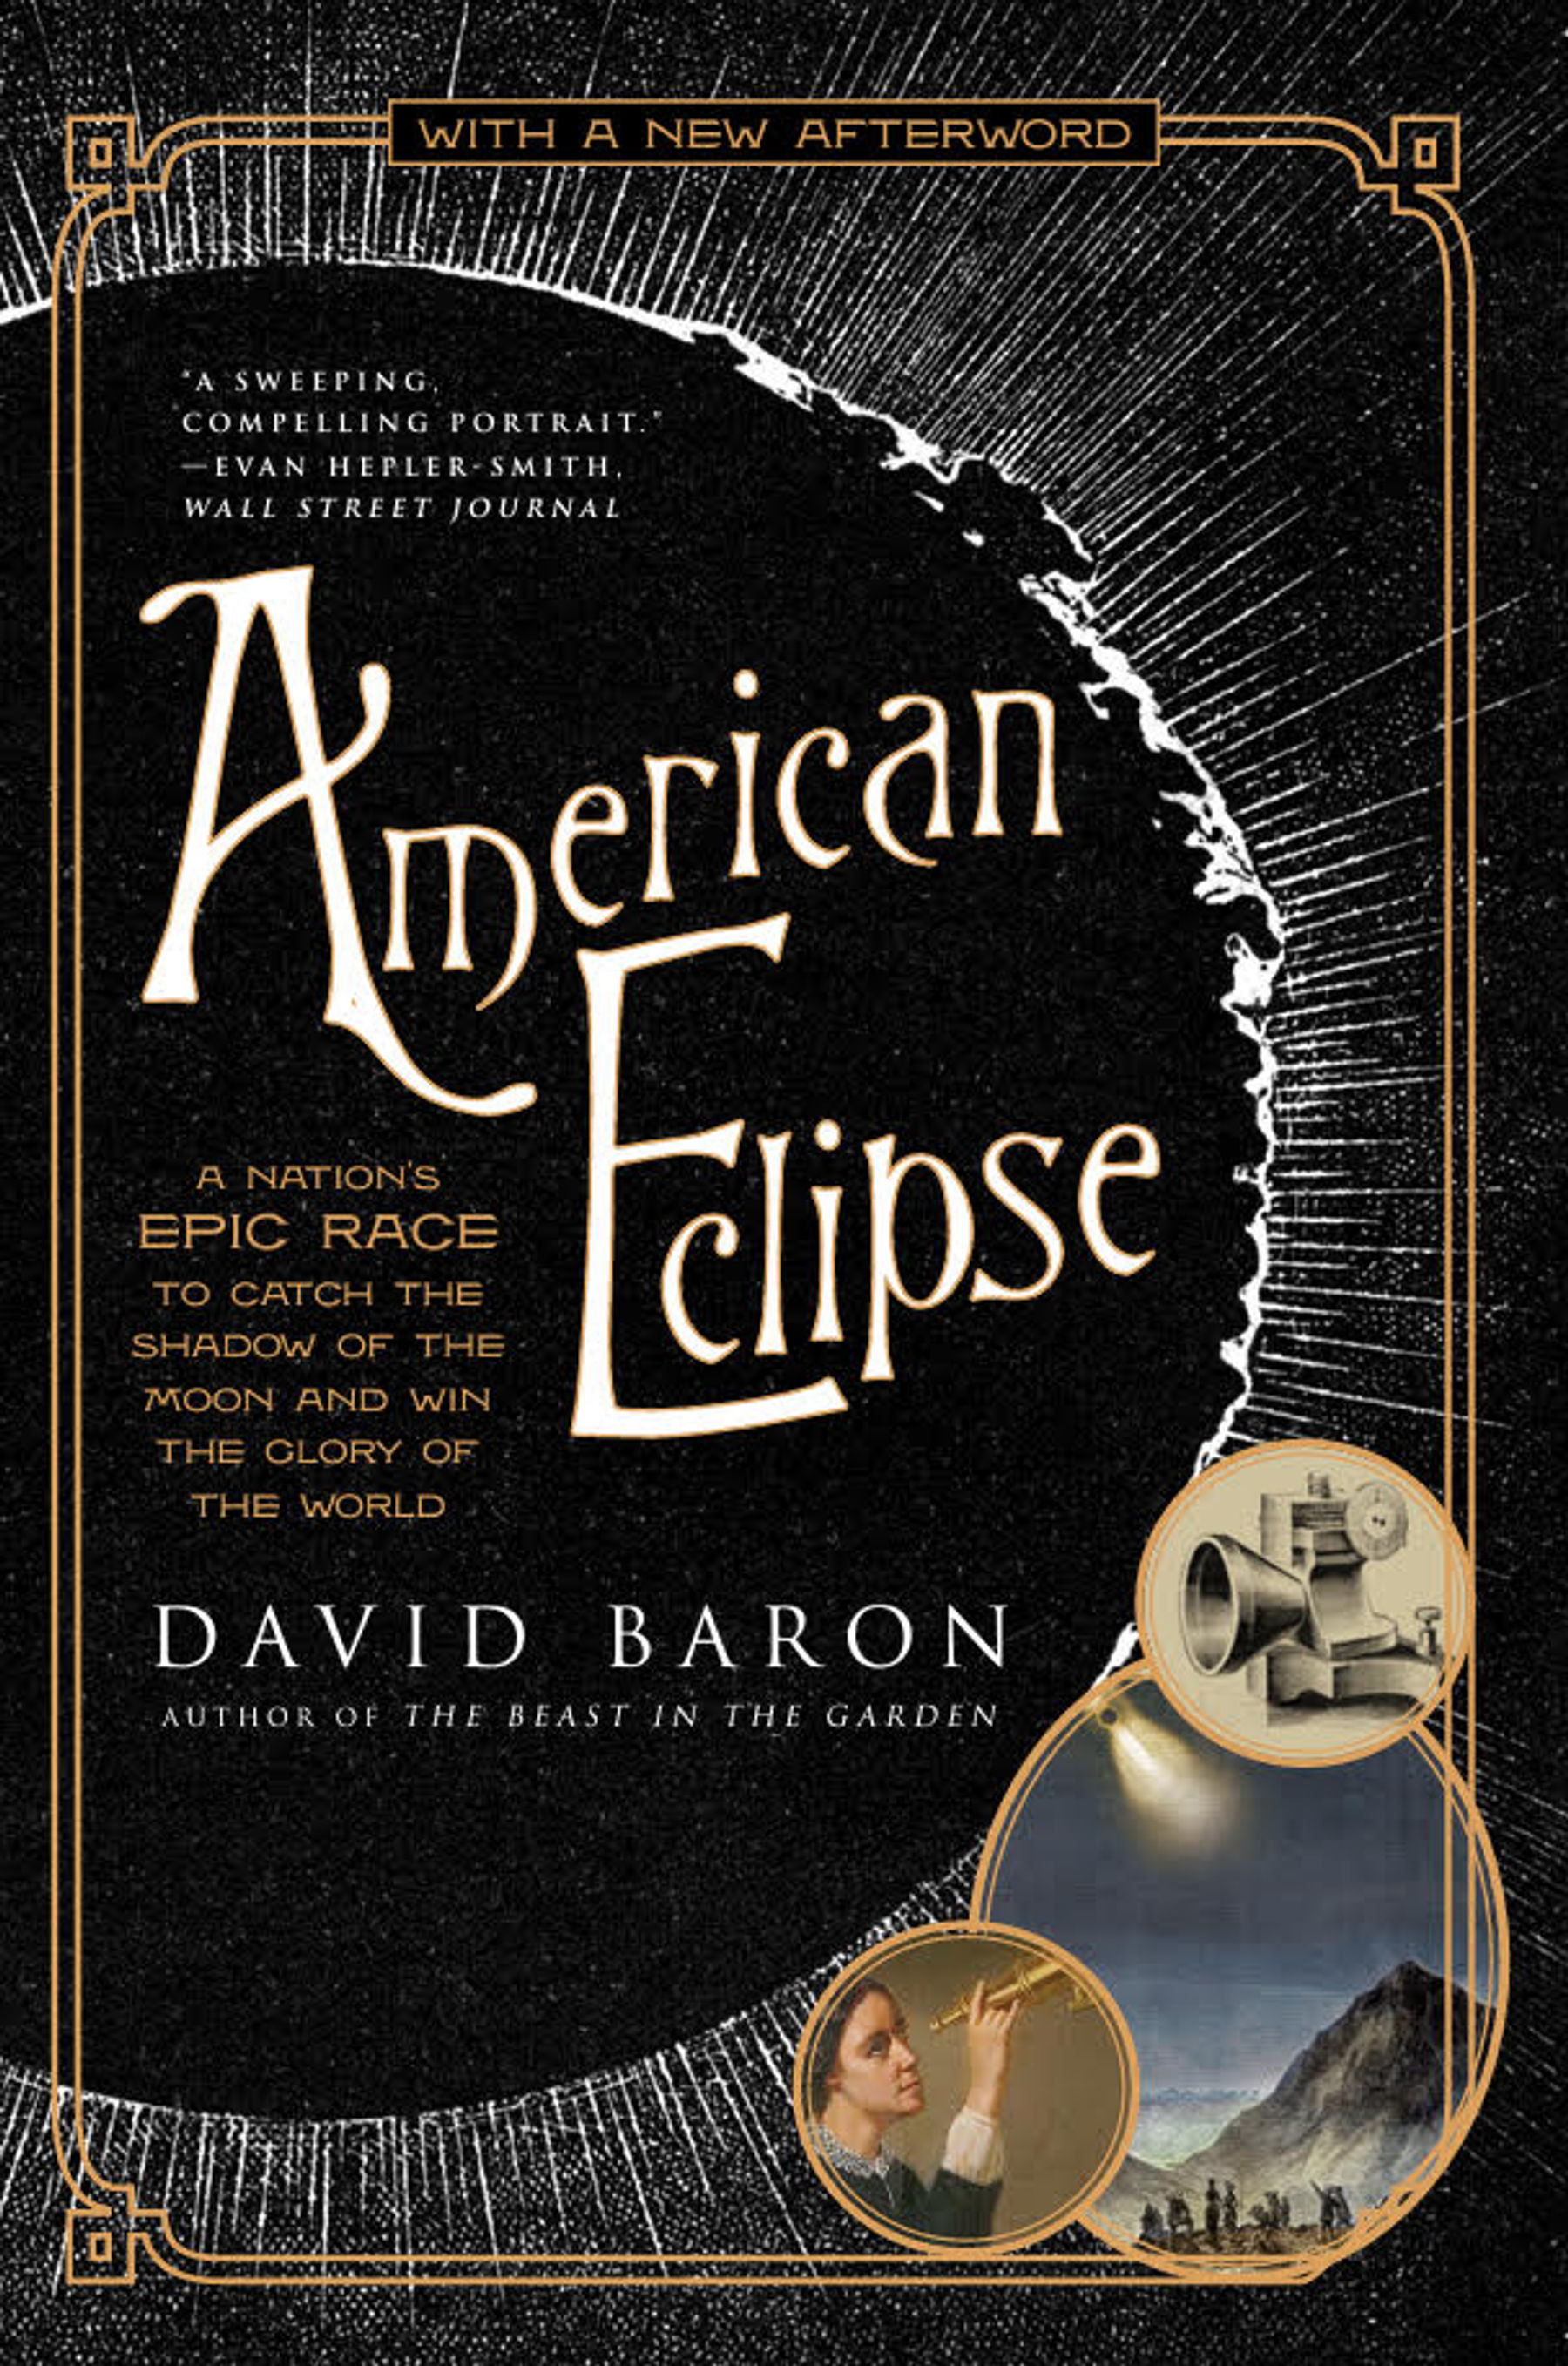 David Baron -- "American Eclipse"